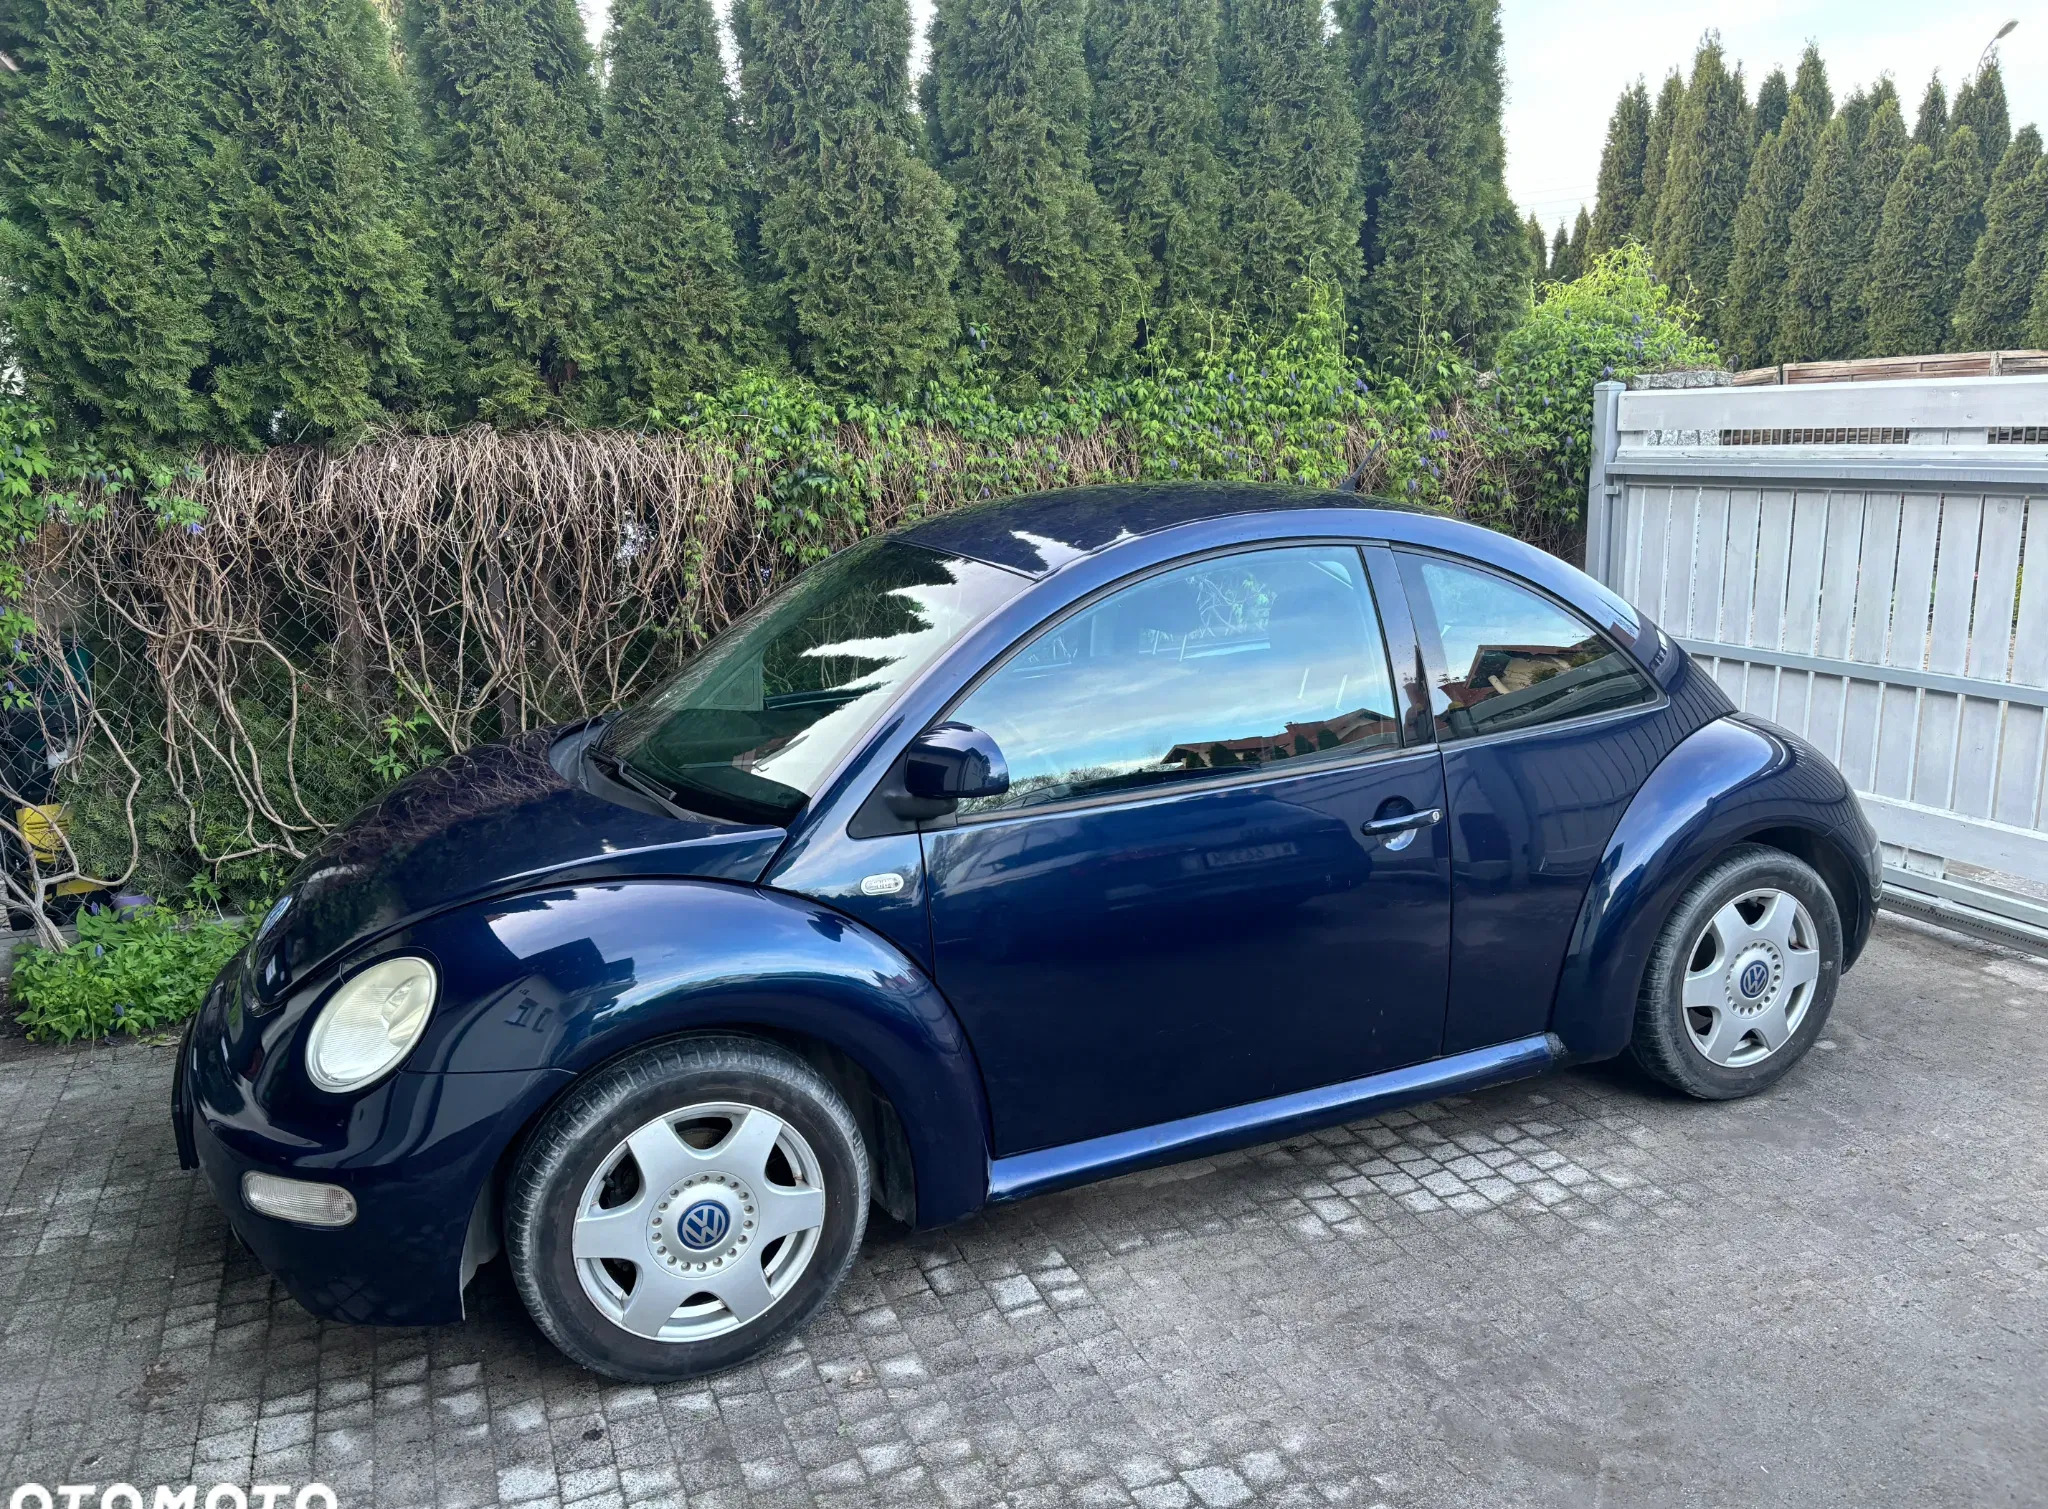 volkswagen Volkswagen New Beetle cena 7200 przebieg: 181700, rok produkcji 1999 z Brwinów